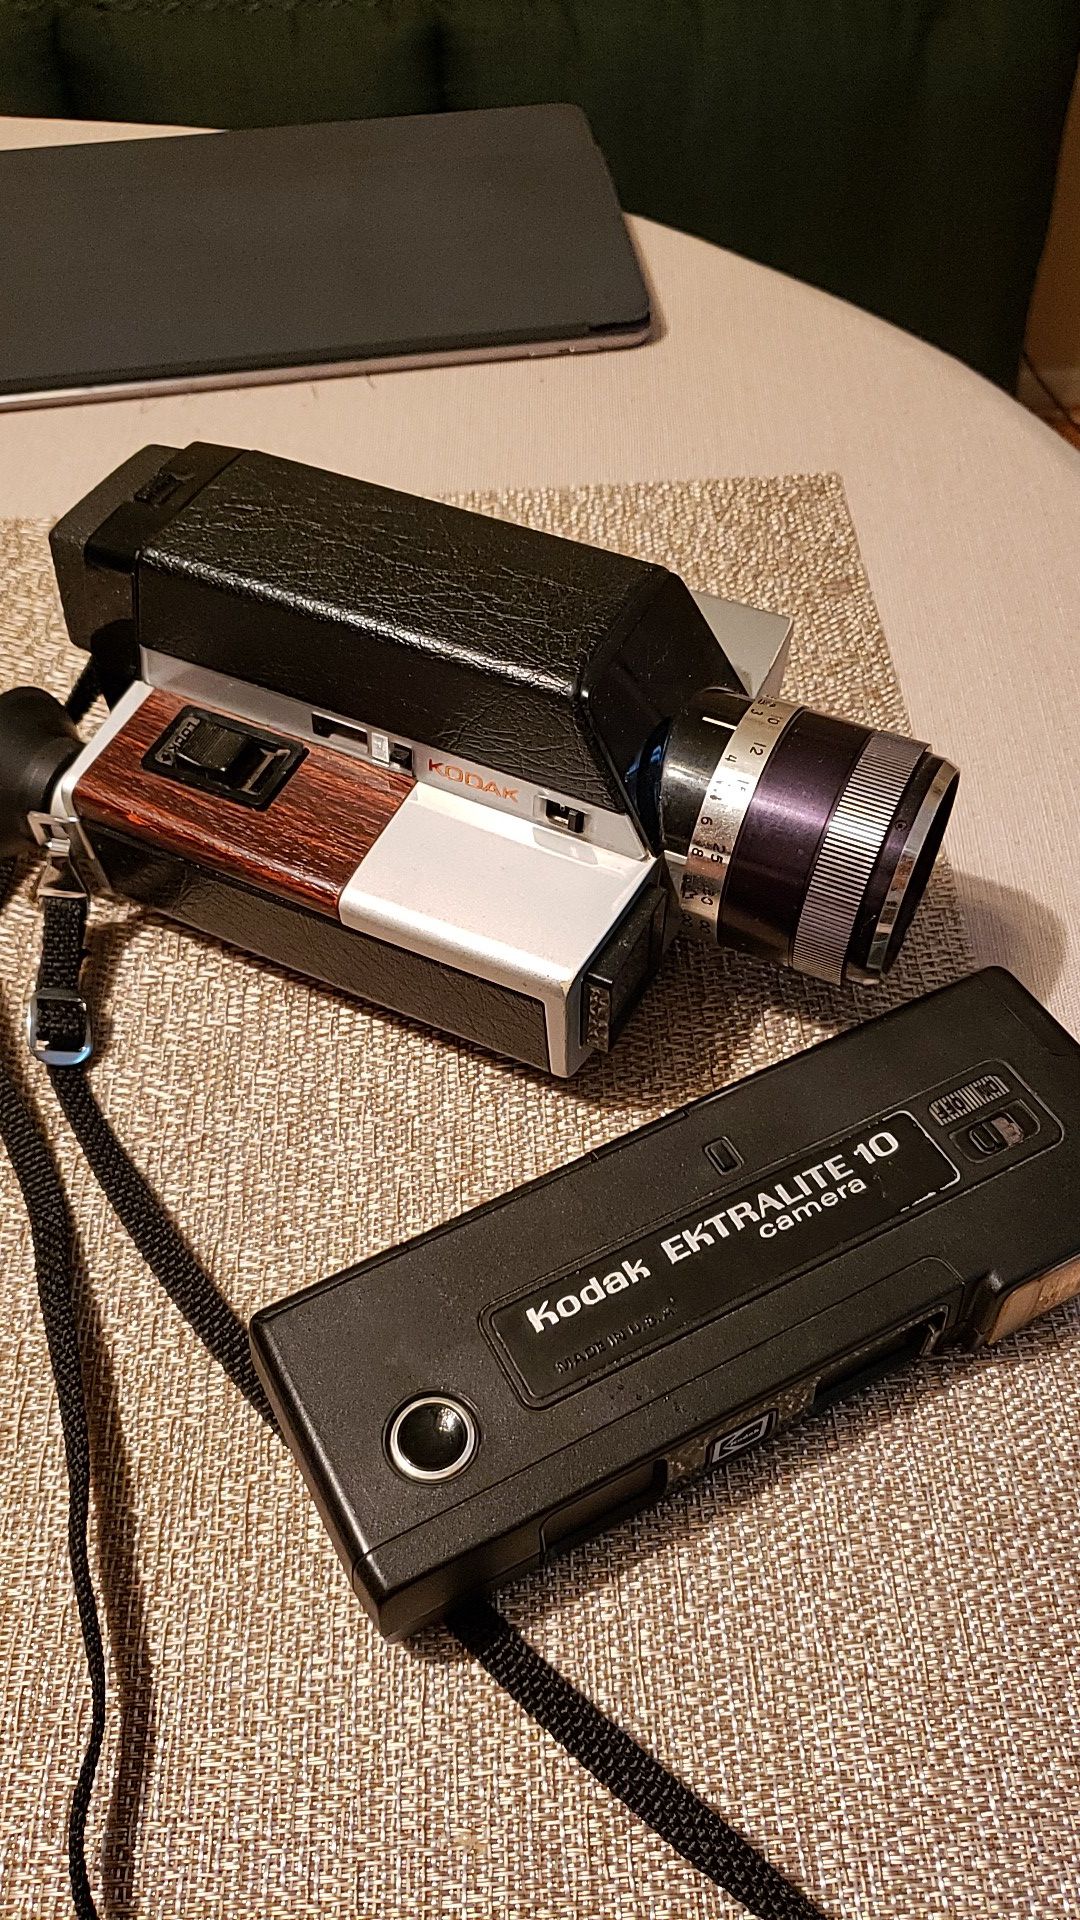 Super 8mm and 10mm "Ice Cream Sandwich" film cameras